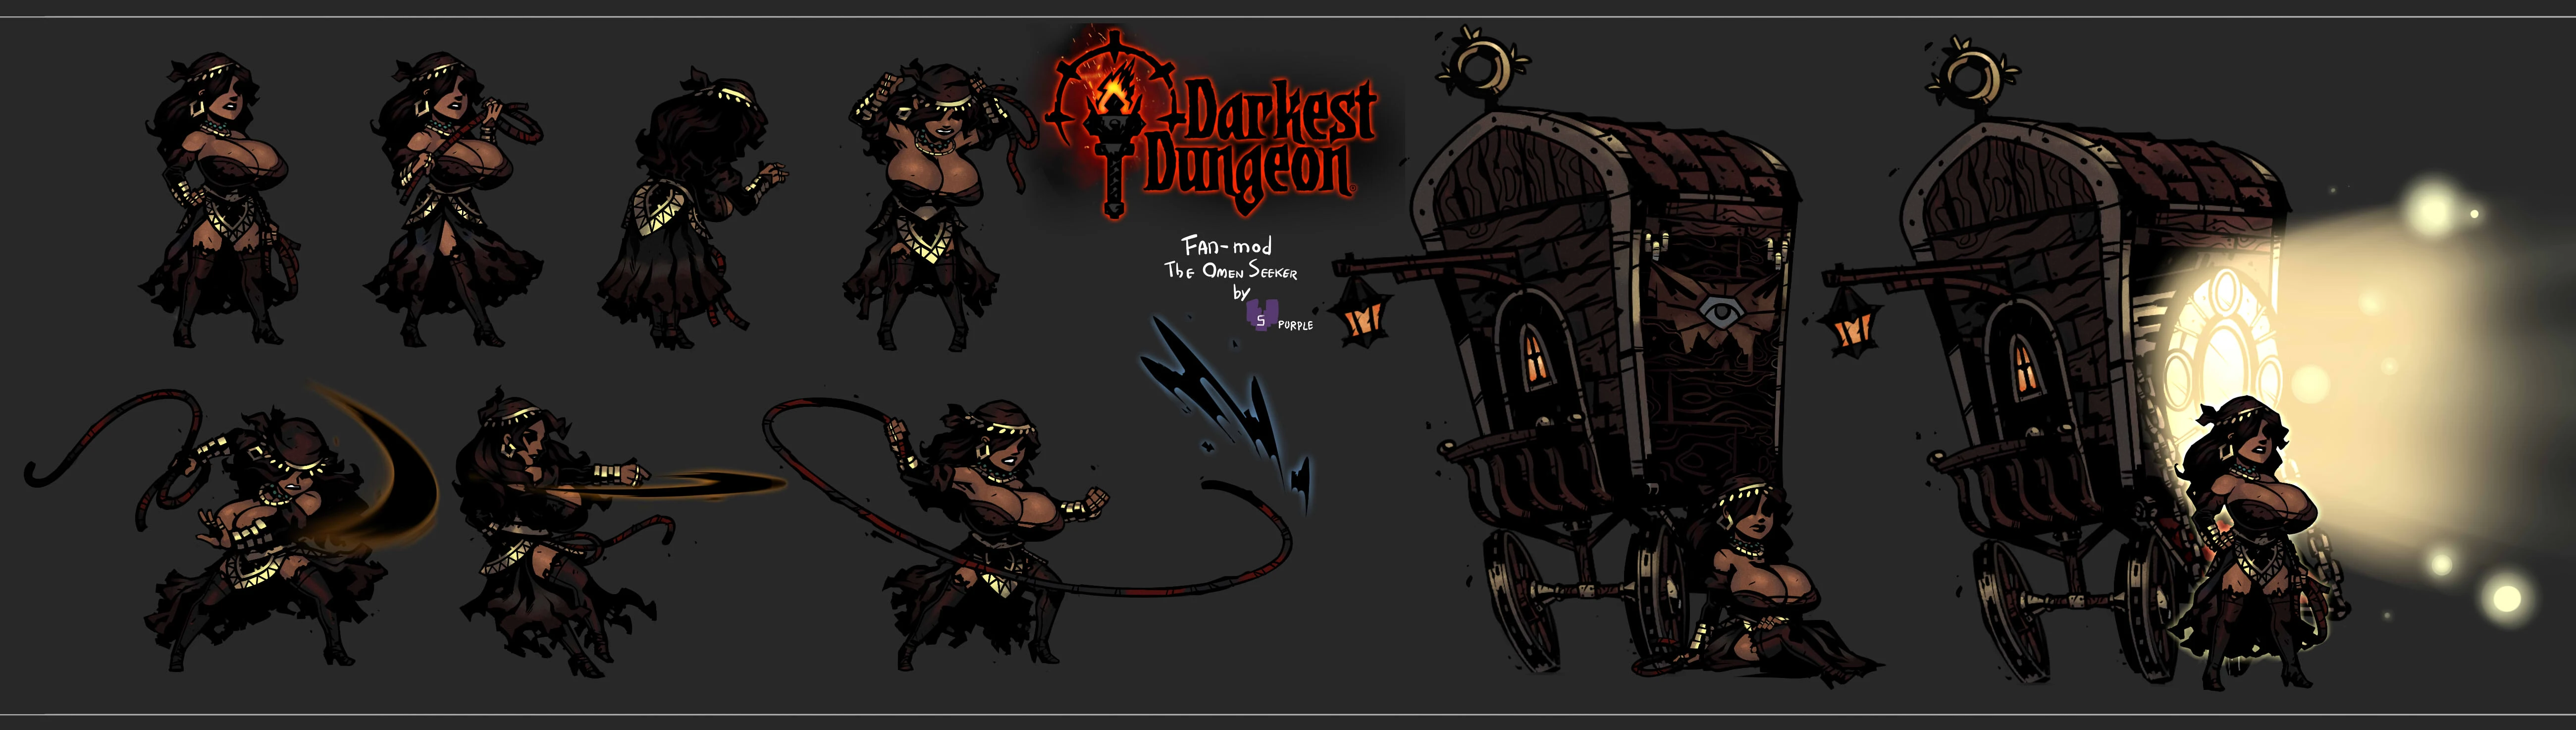 darkest dungeon mod characters